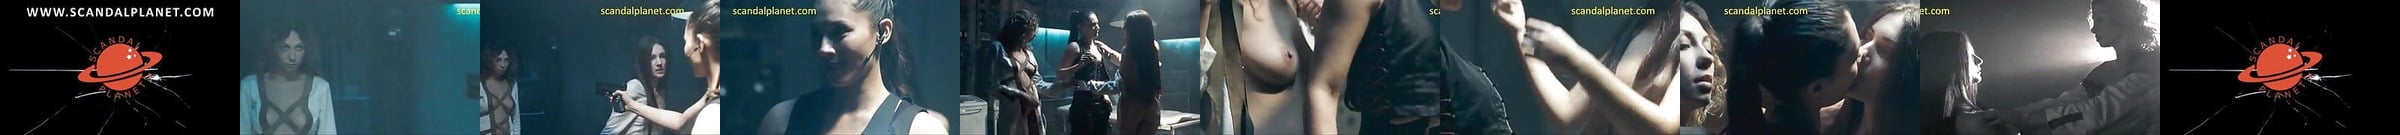 Ana Alexander Lesbians Sex Scene In Femme Fatales Porn 46 Xhamster